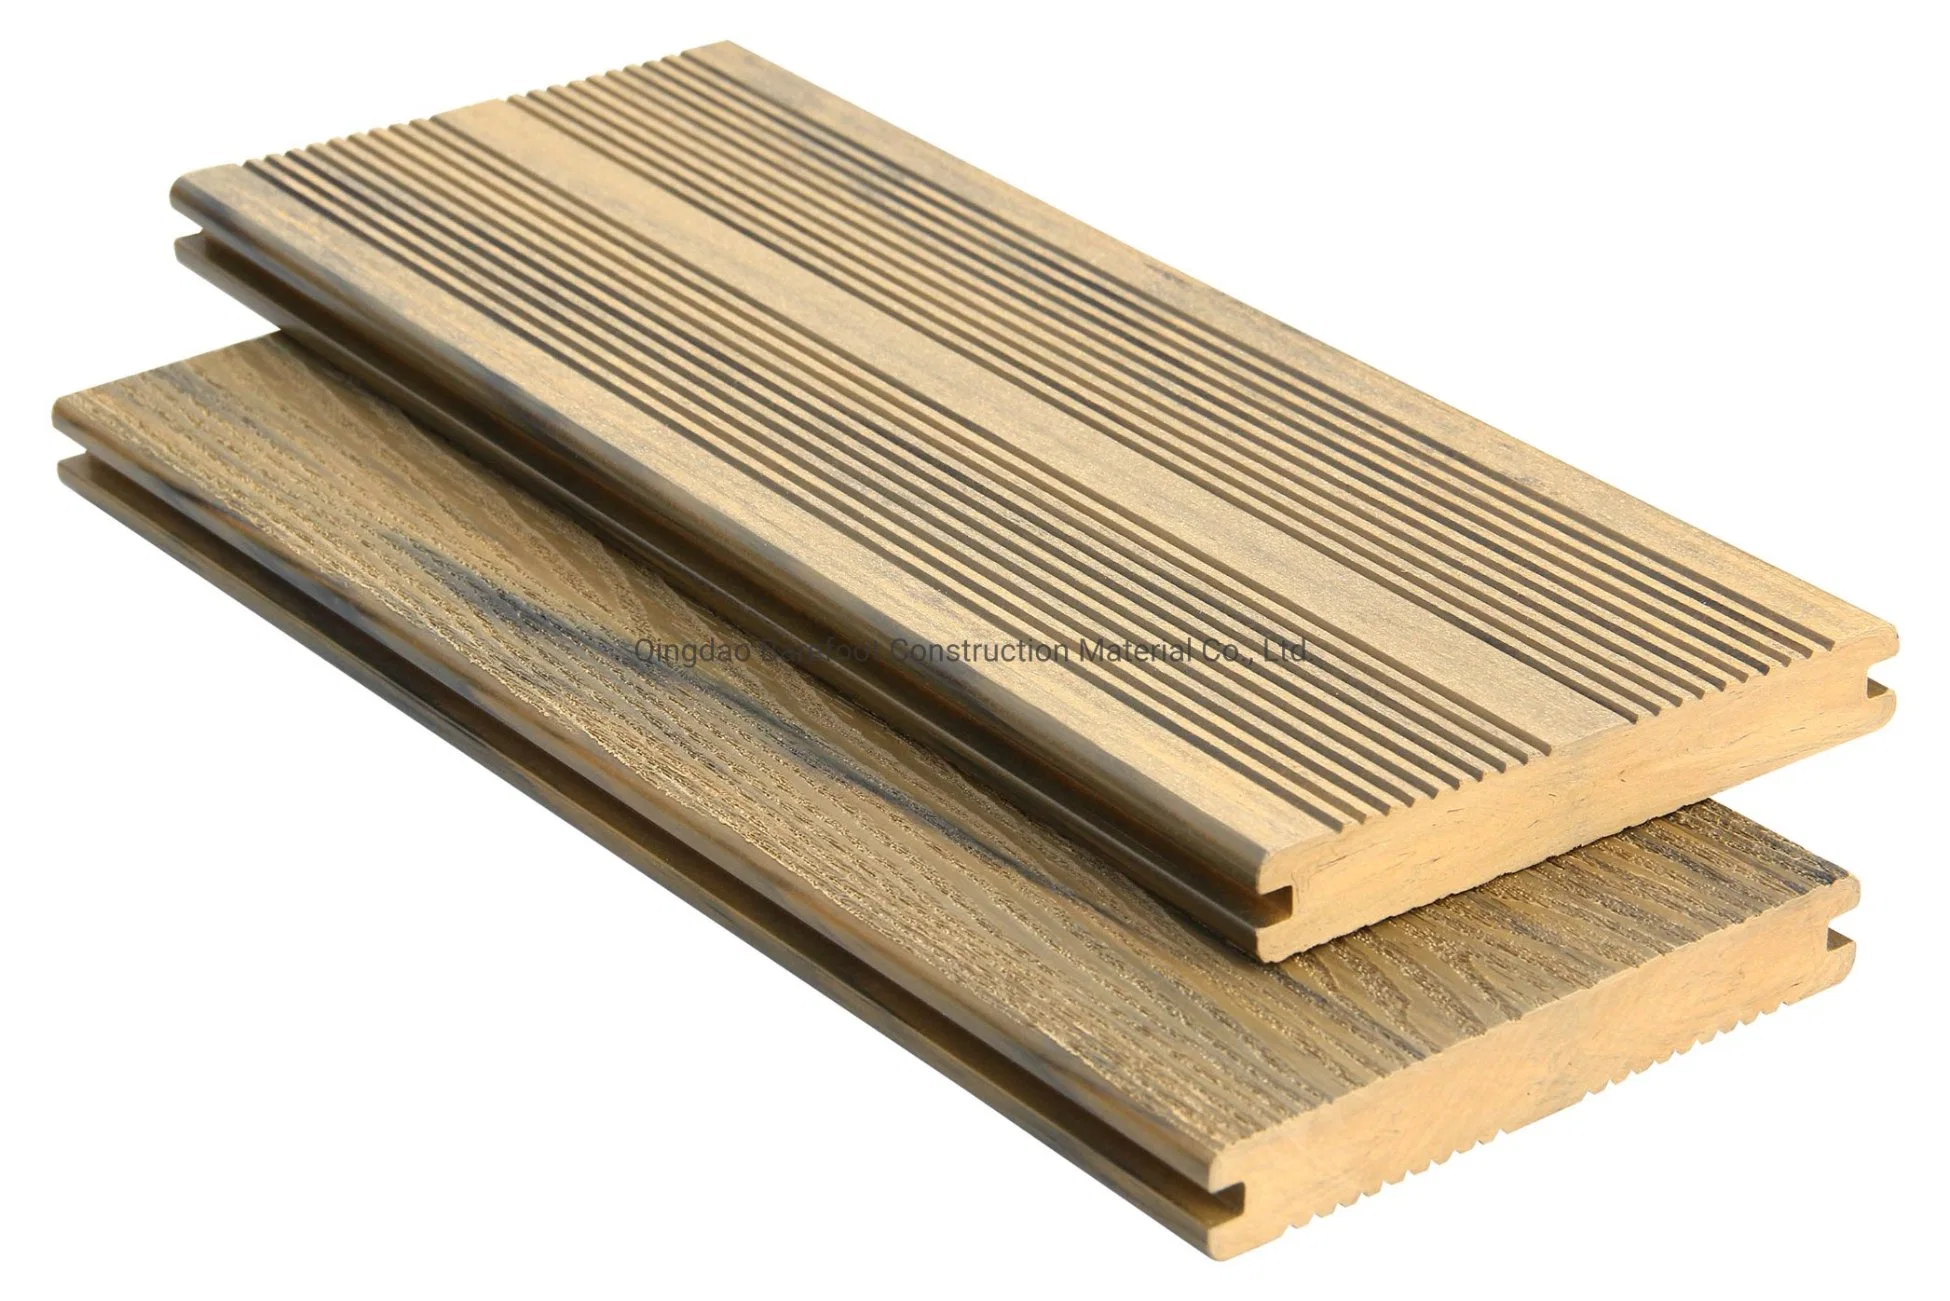 لوح خشبي ثابت خارجي متين مع سطح خشبي ثابت